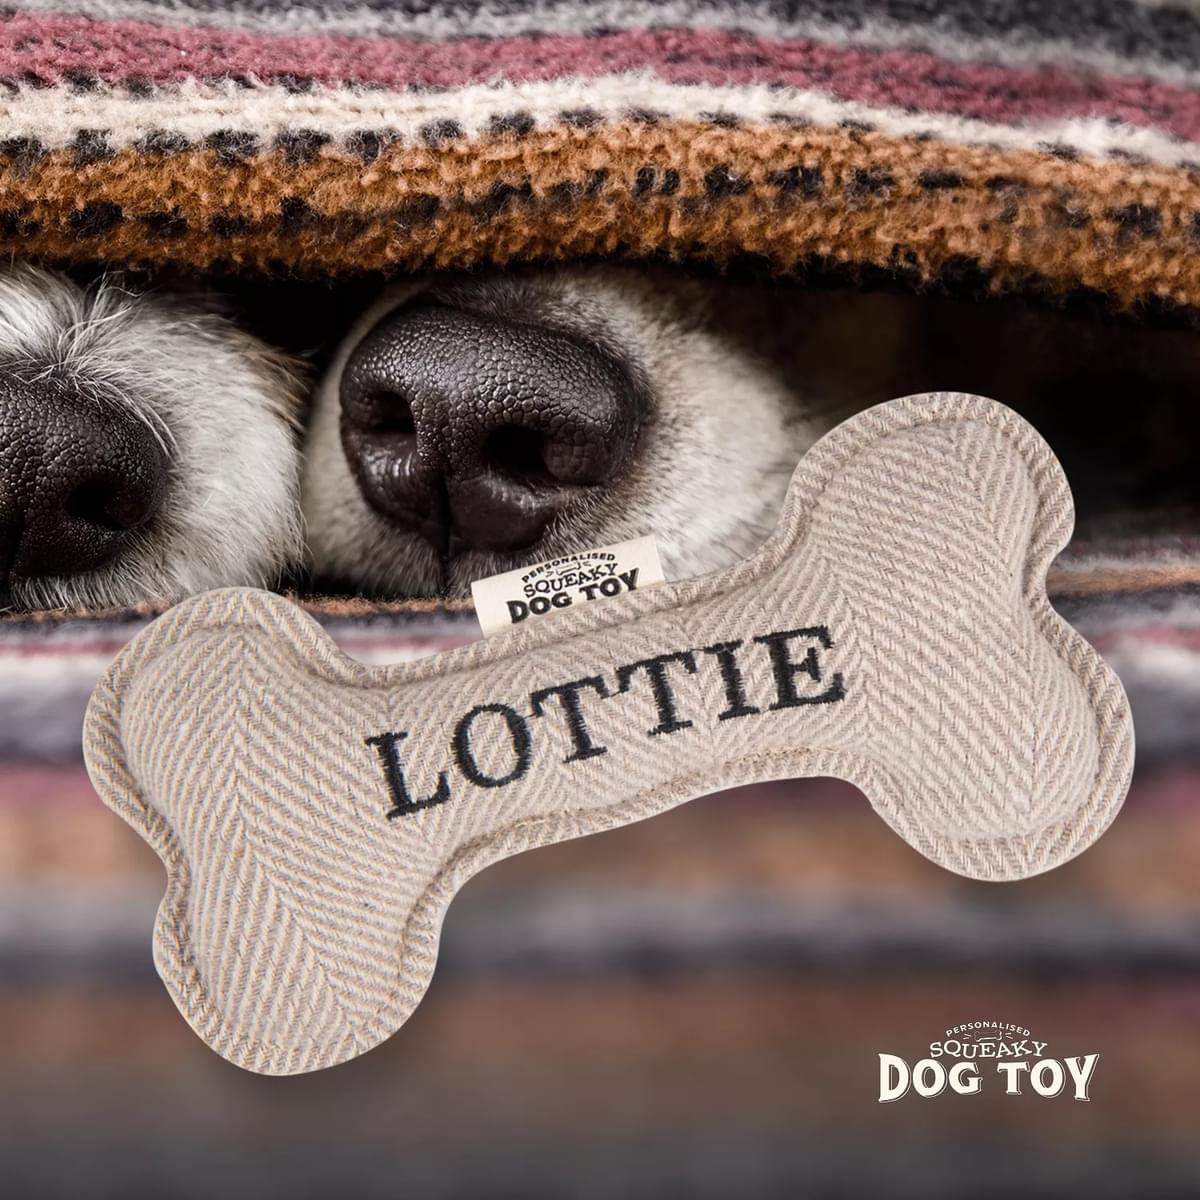 Named Squeaky Dog Toy- Lottie. Bone shaped herringbone tweed pattern dog toy. 